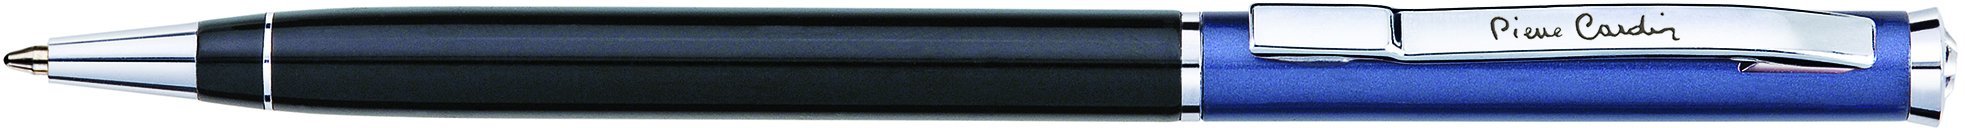 Шариковая ручка Pierre Cardin Gamme металлик, хром